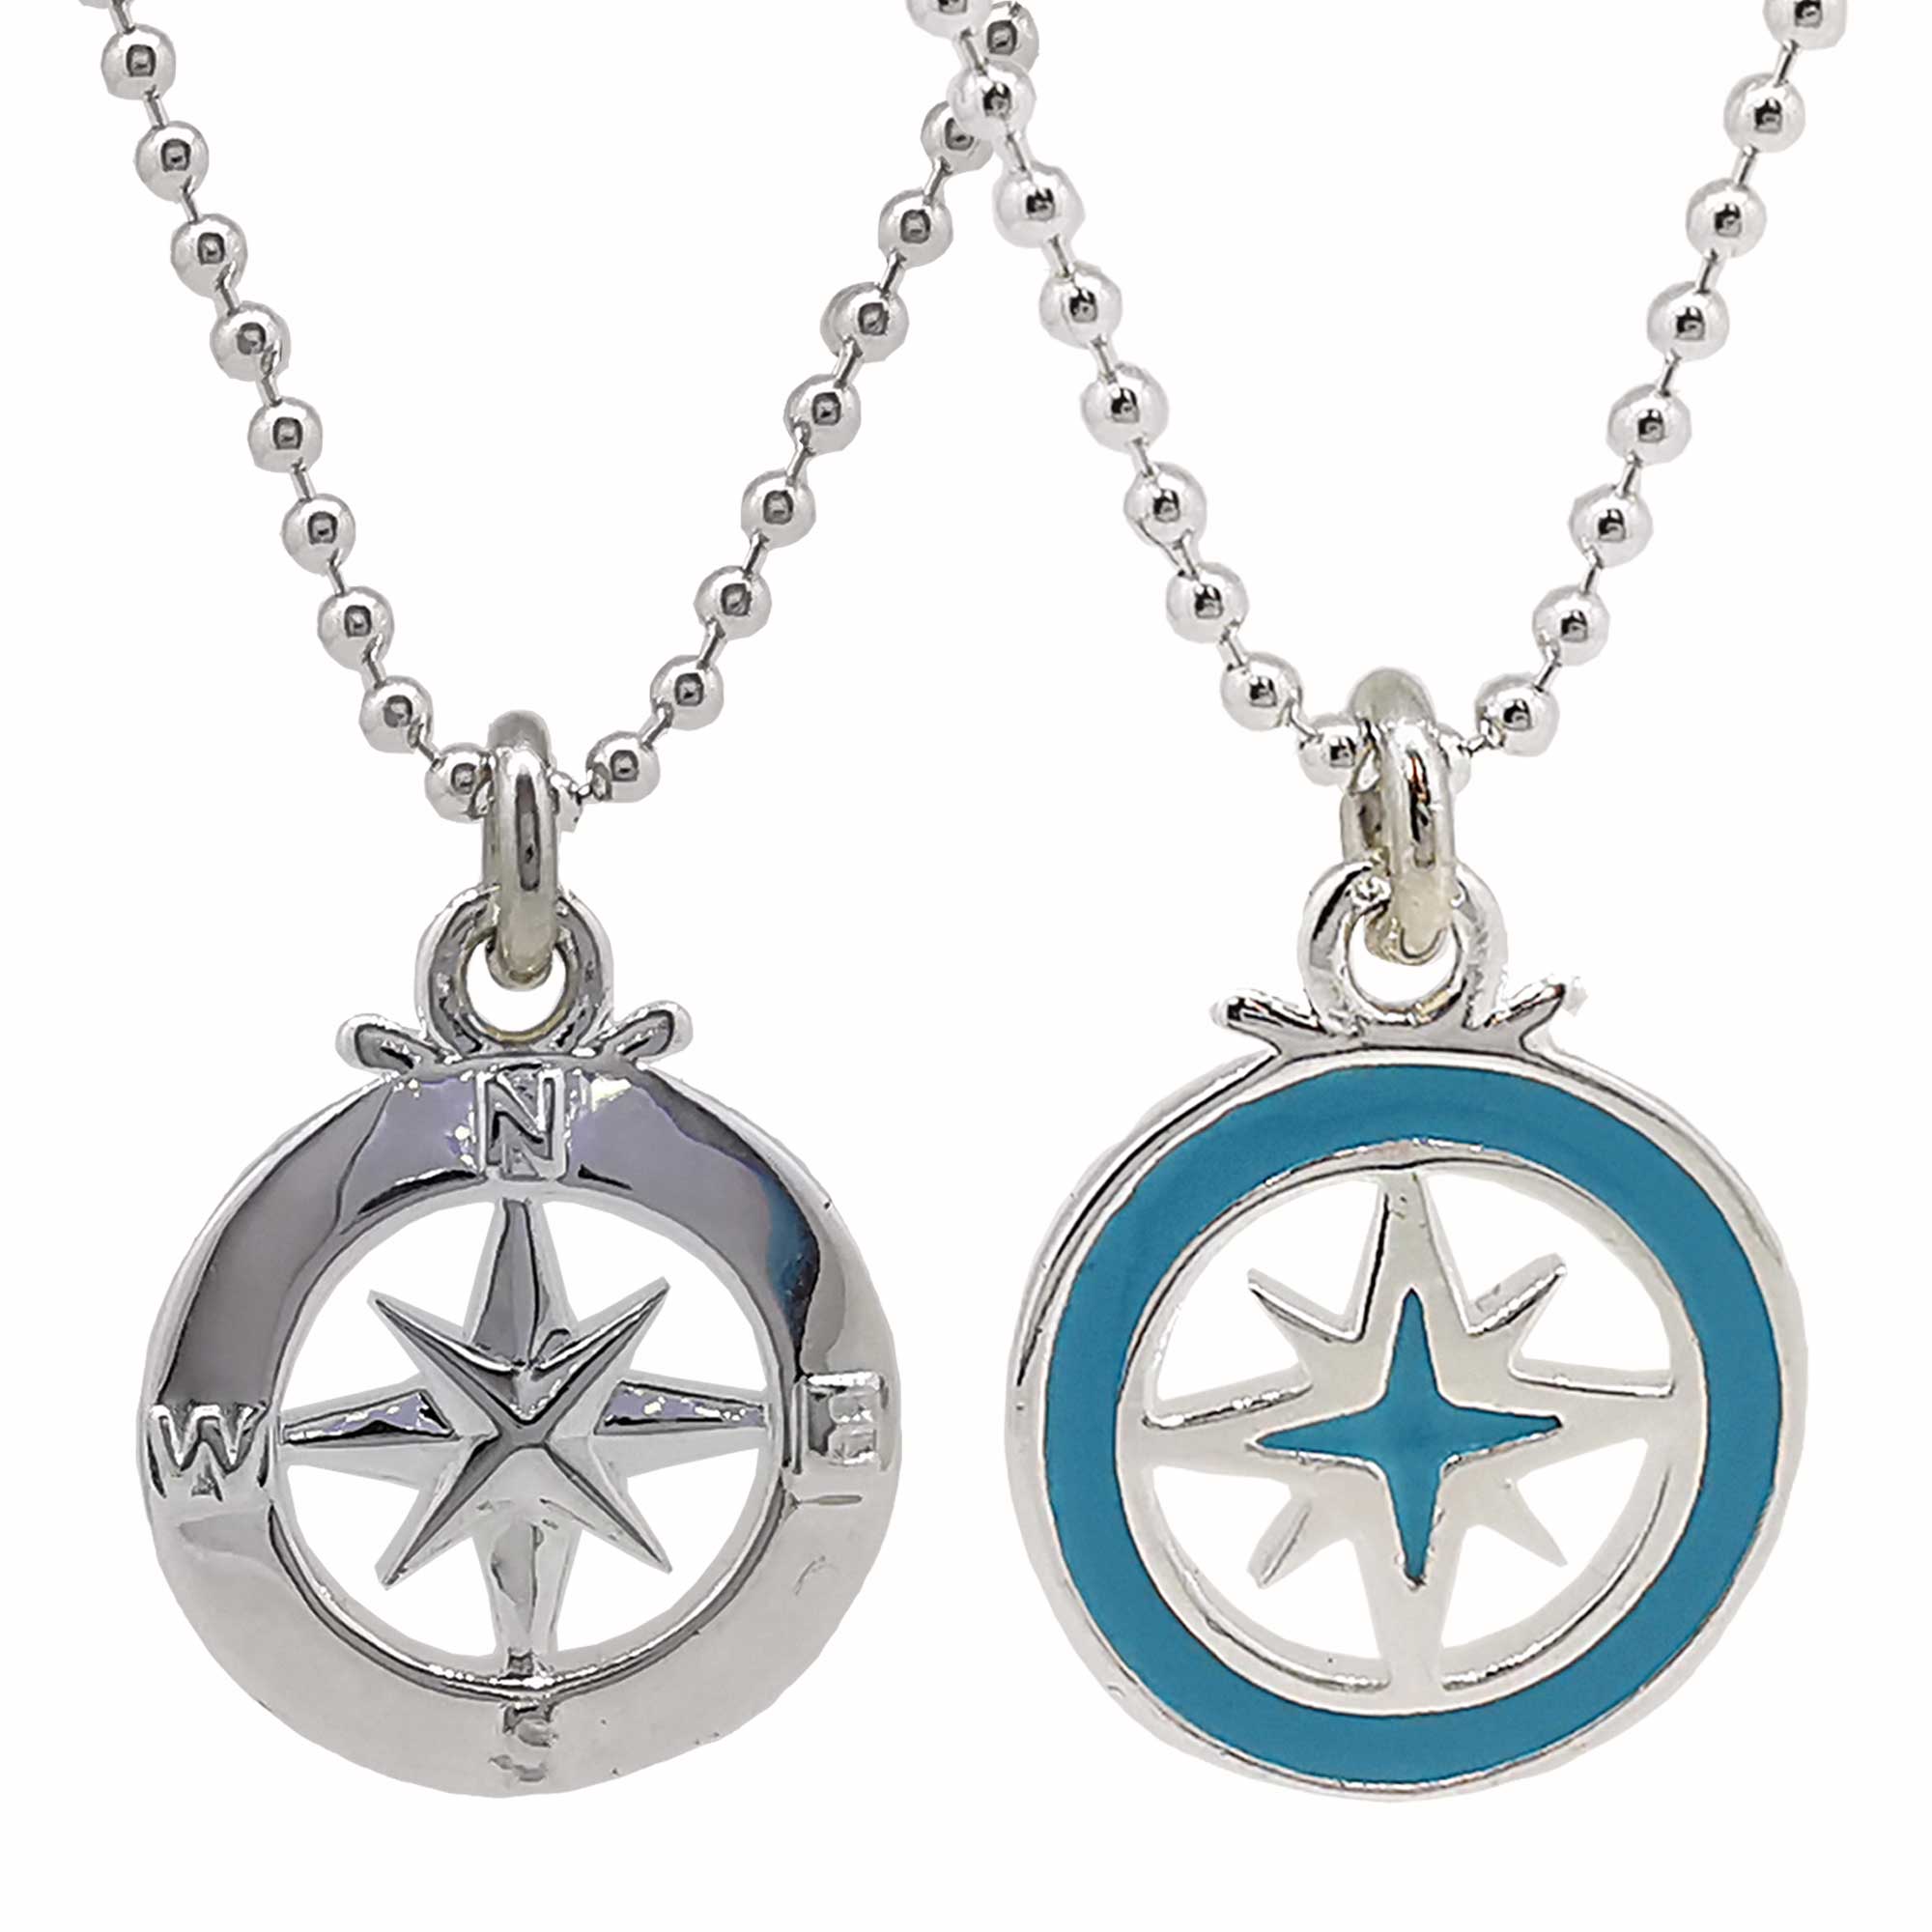 Enamel compass necklace for women travel alternative saint christopher pendant gift